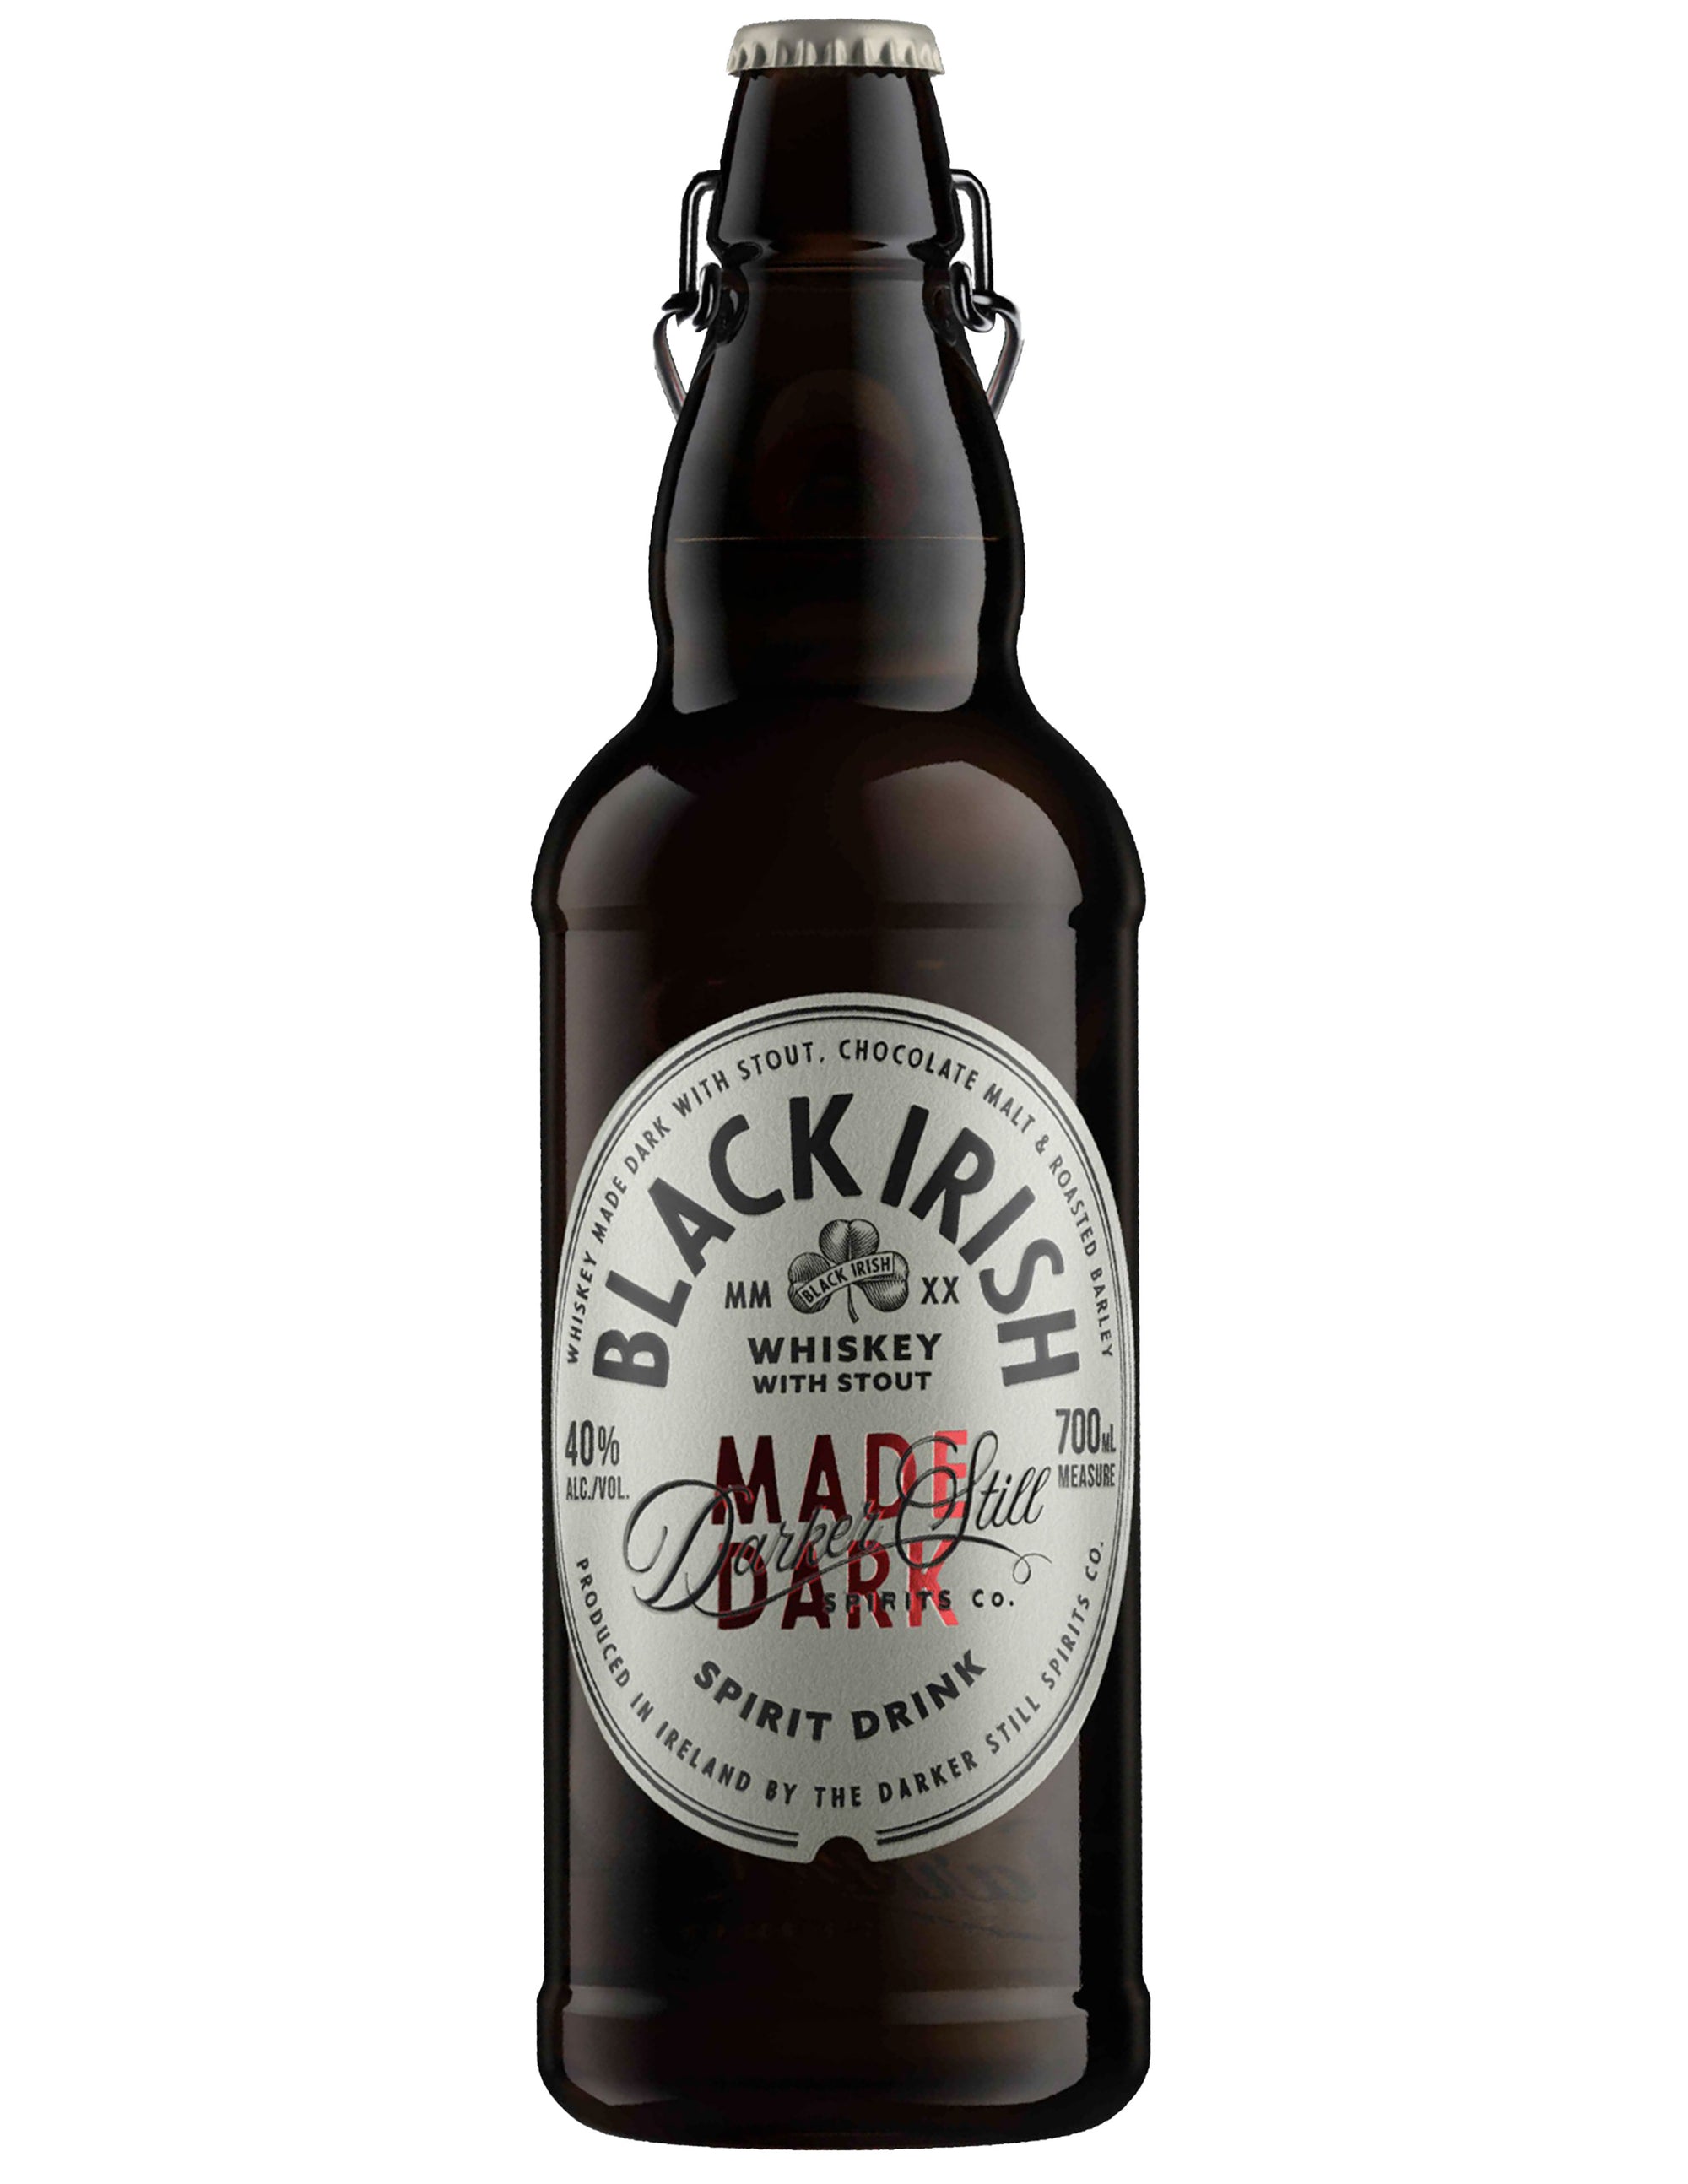 Darker Still Spirits Co. Black Irish Whiskey With Stout 700 ml, 40% ABV